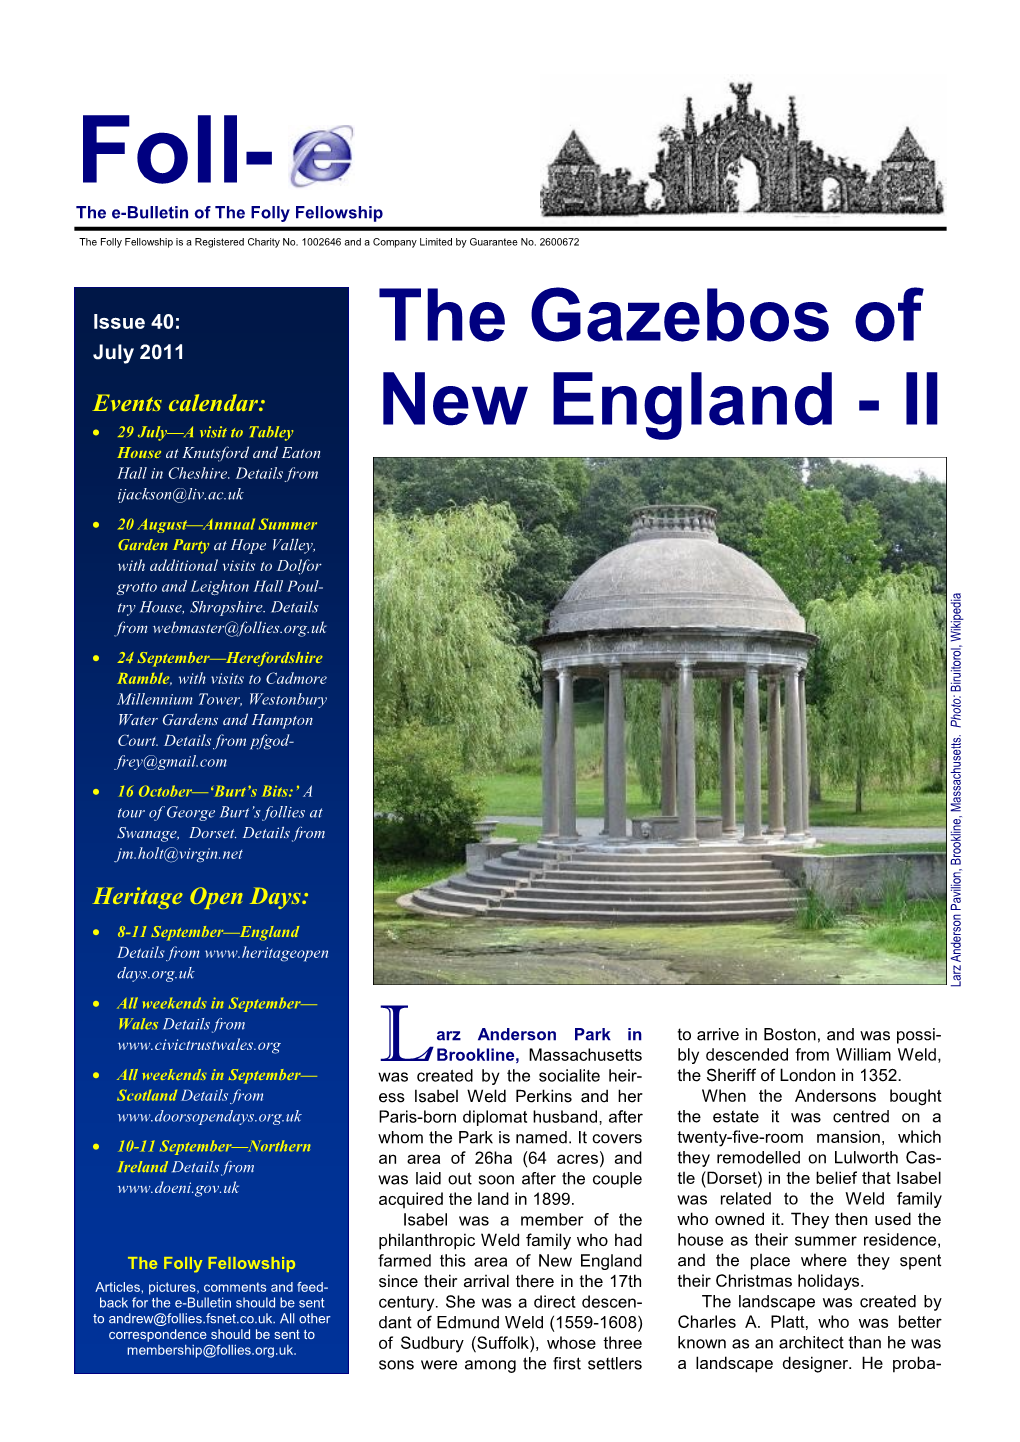 The Gazebos of New England